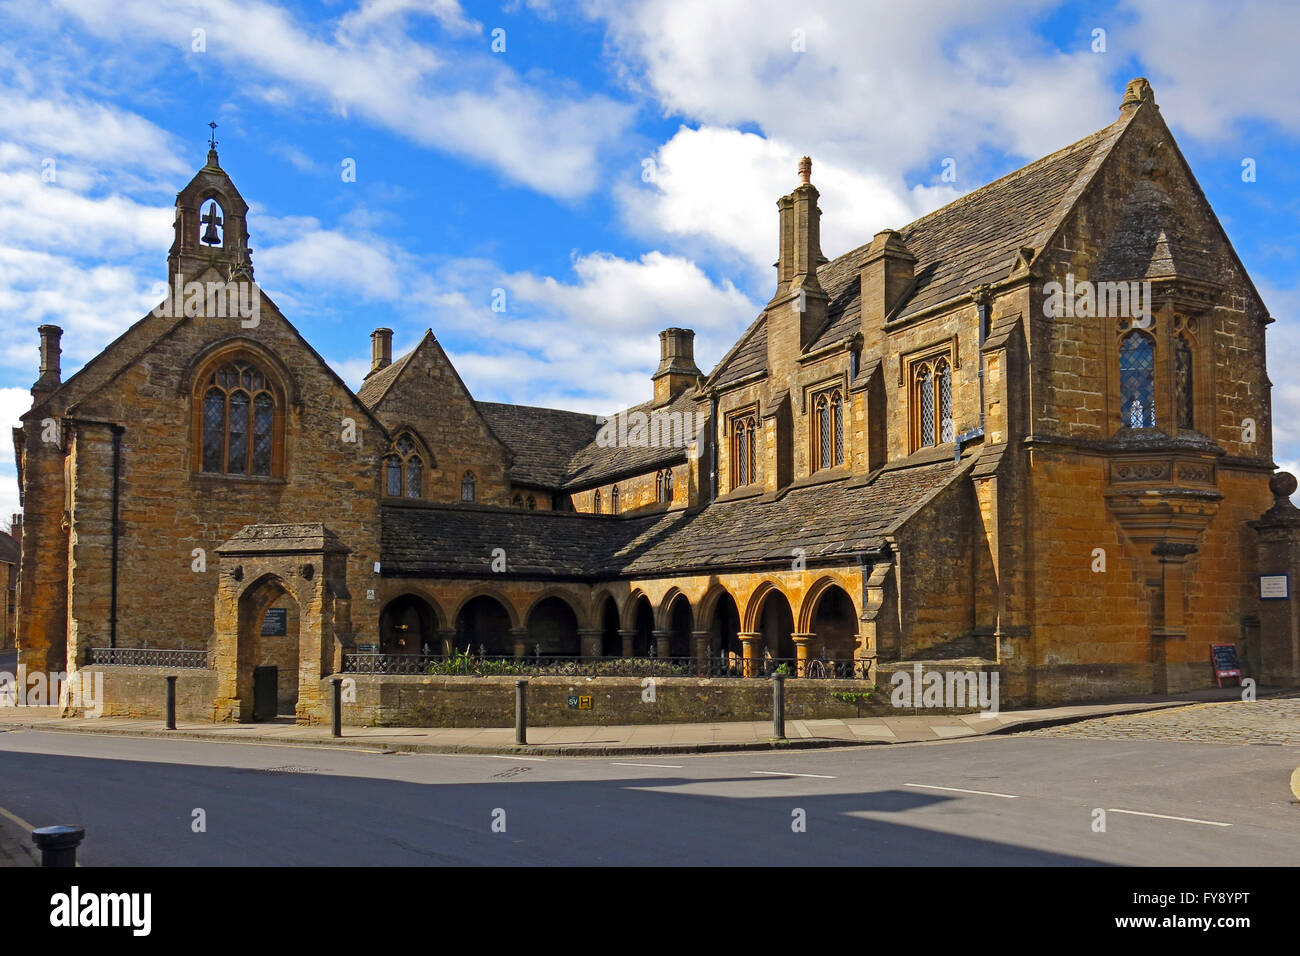 The historic 15th century St John's Almshouses in Sherborne, Dorset, England, UK Stock Photo